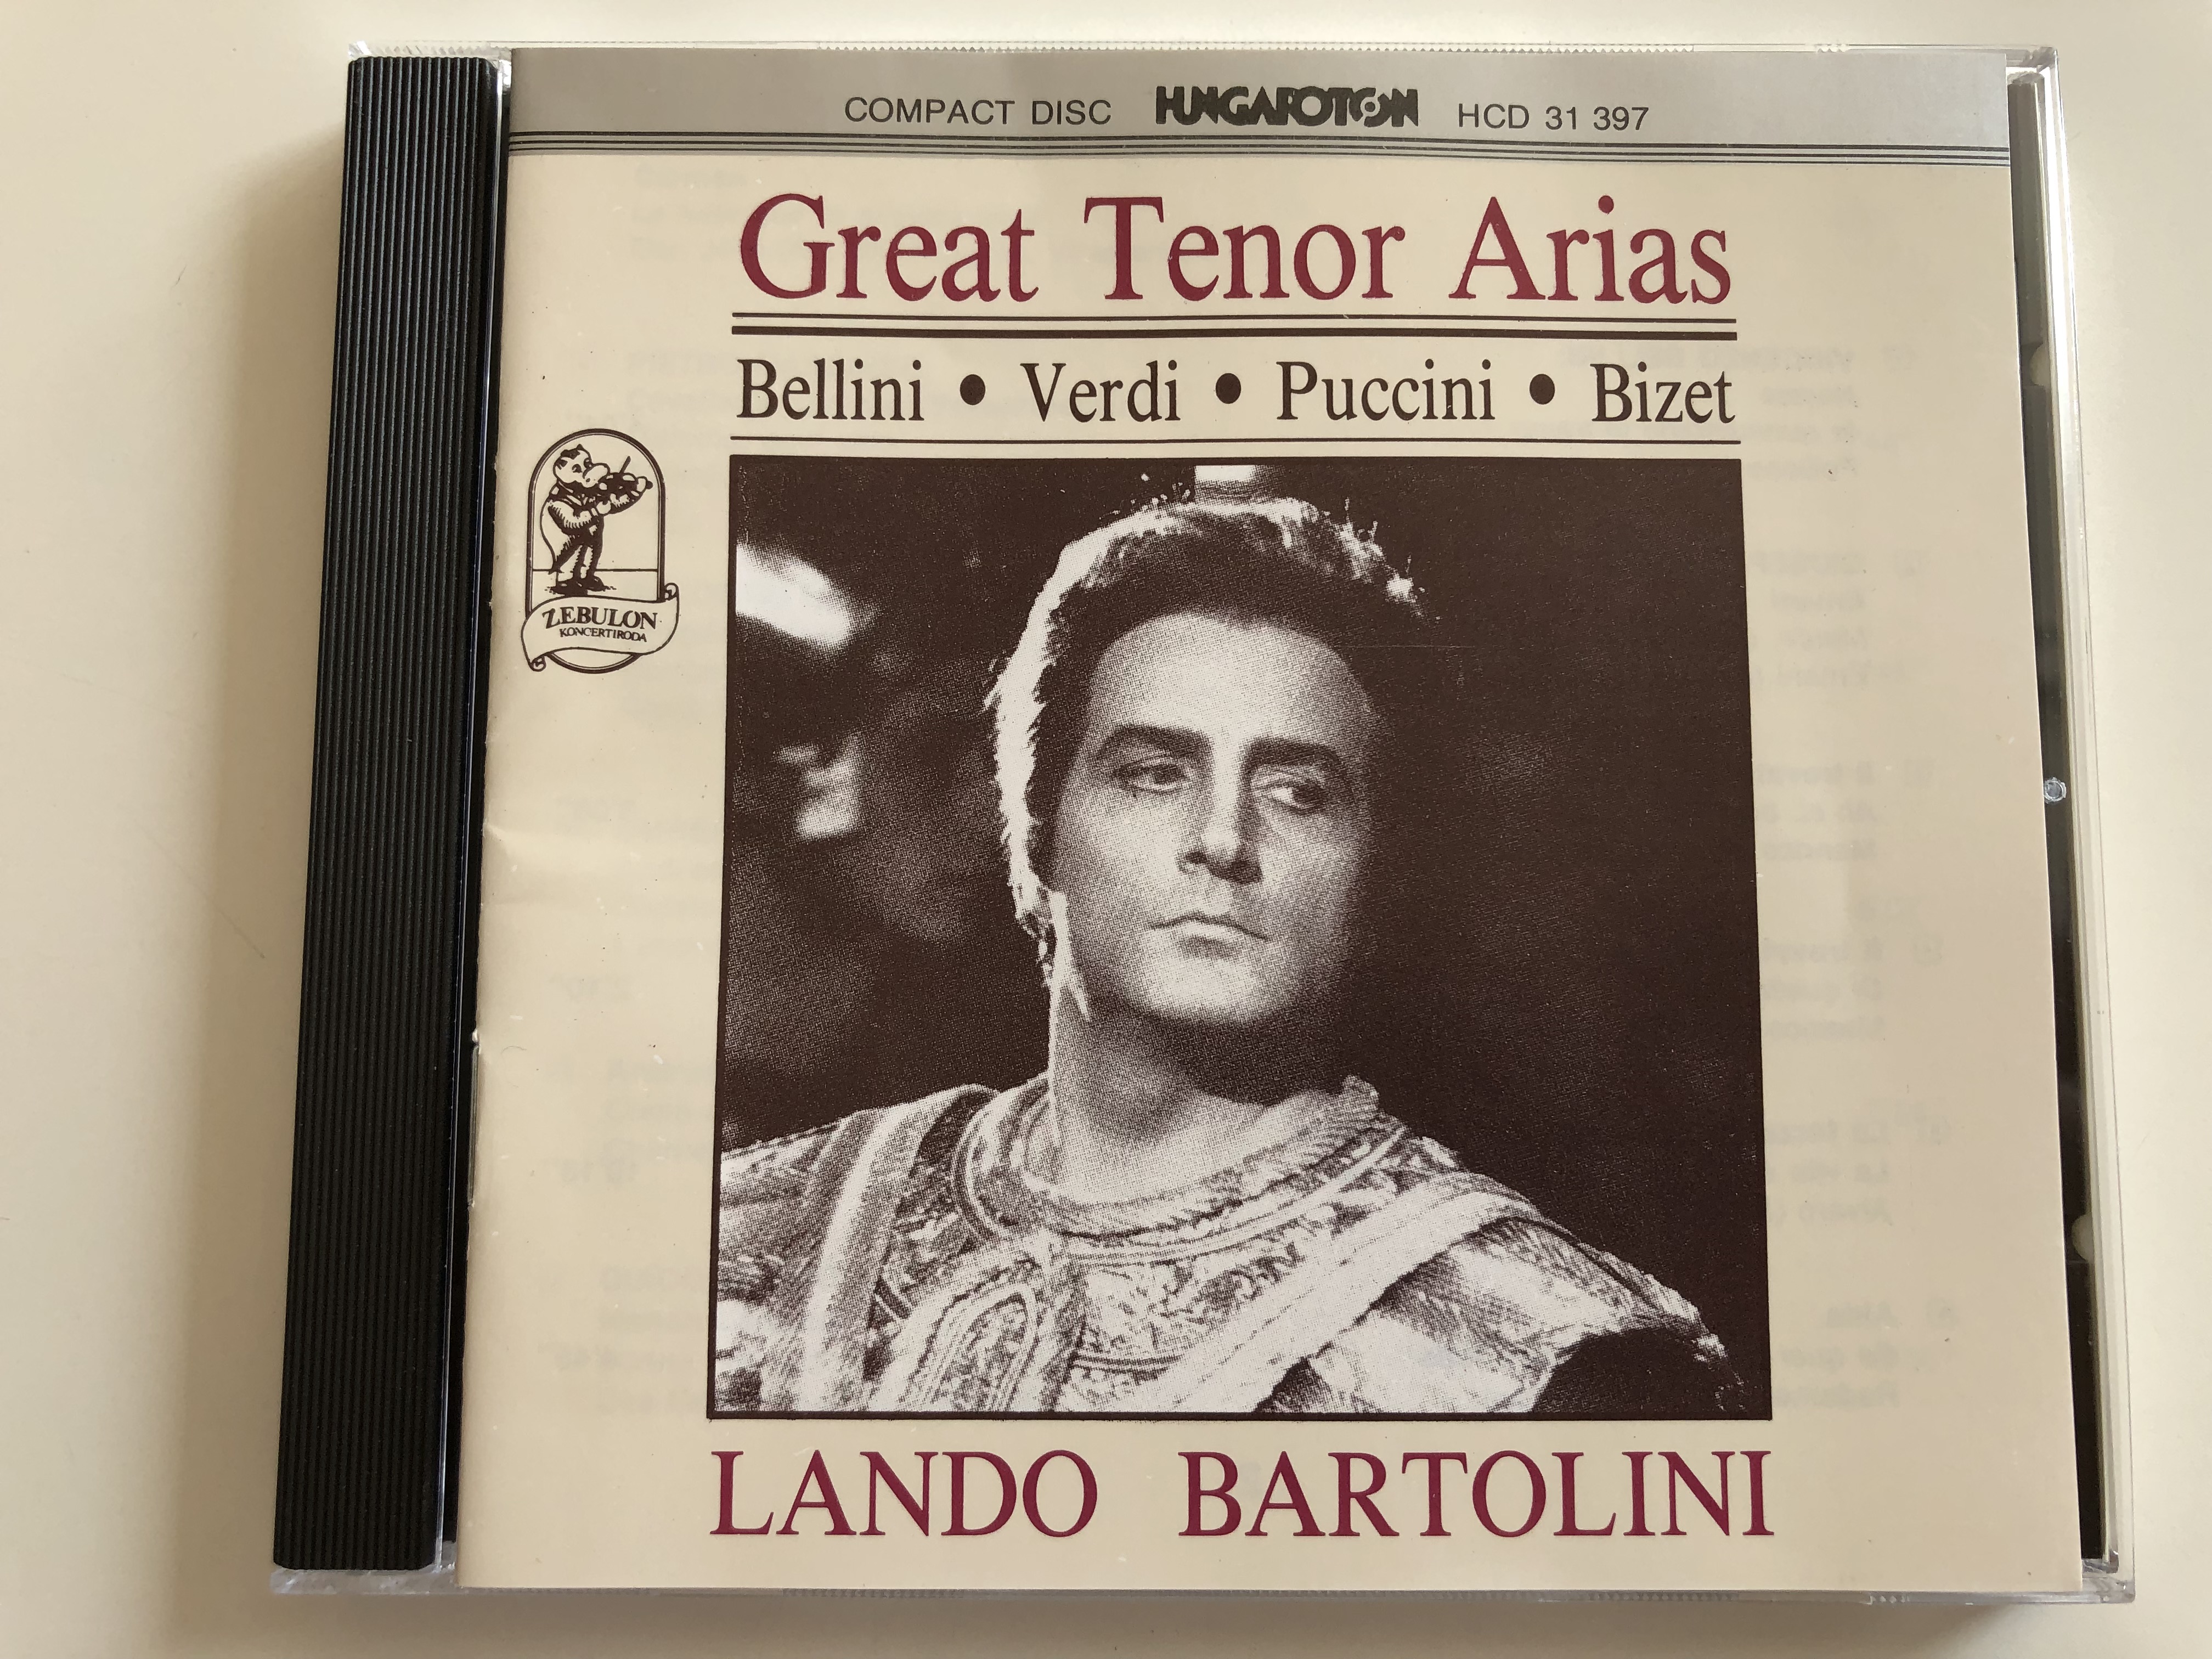 -lando-bartolini-great-tenor-arias-bellini-verdi-puccini-bizet-hungaroton-audio-cd-1991-hcd-31-397-1-.jpg